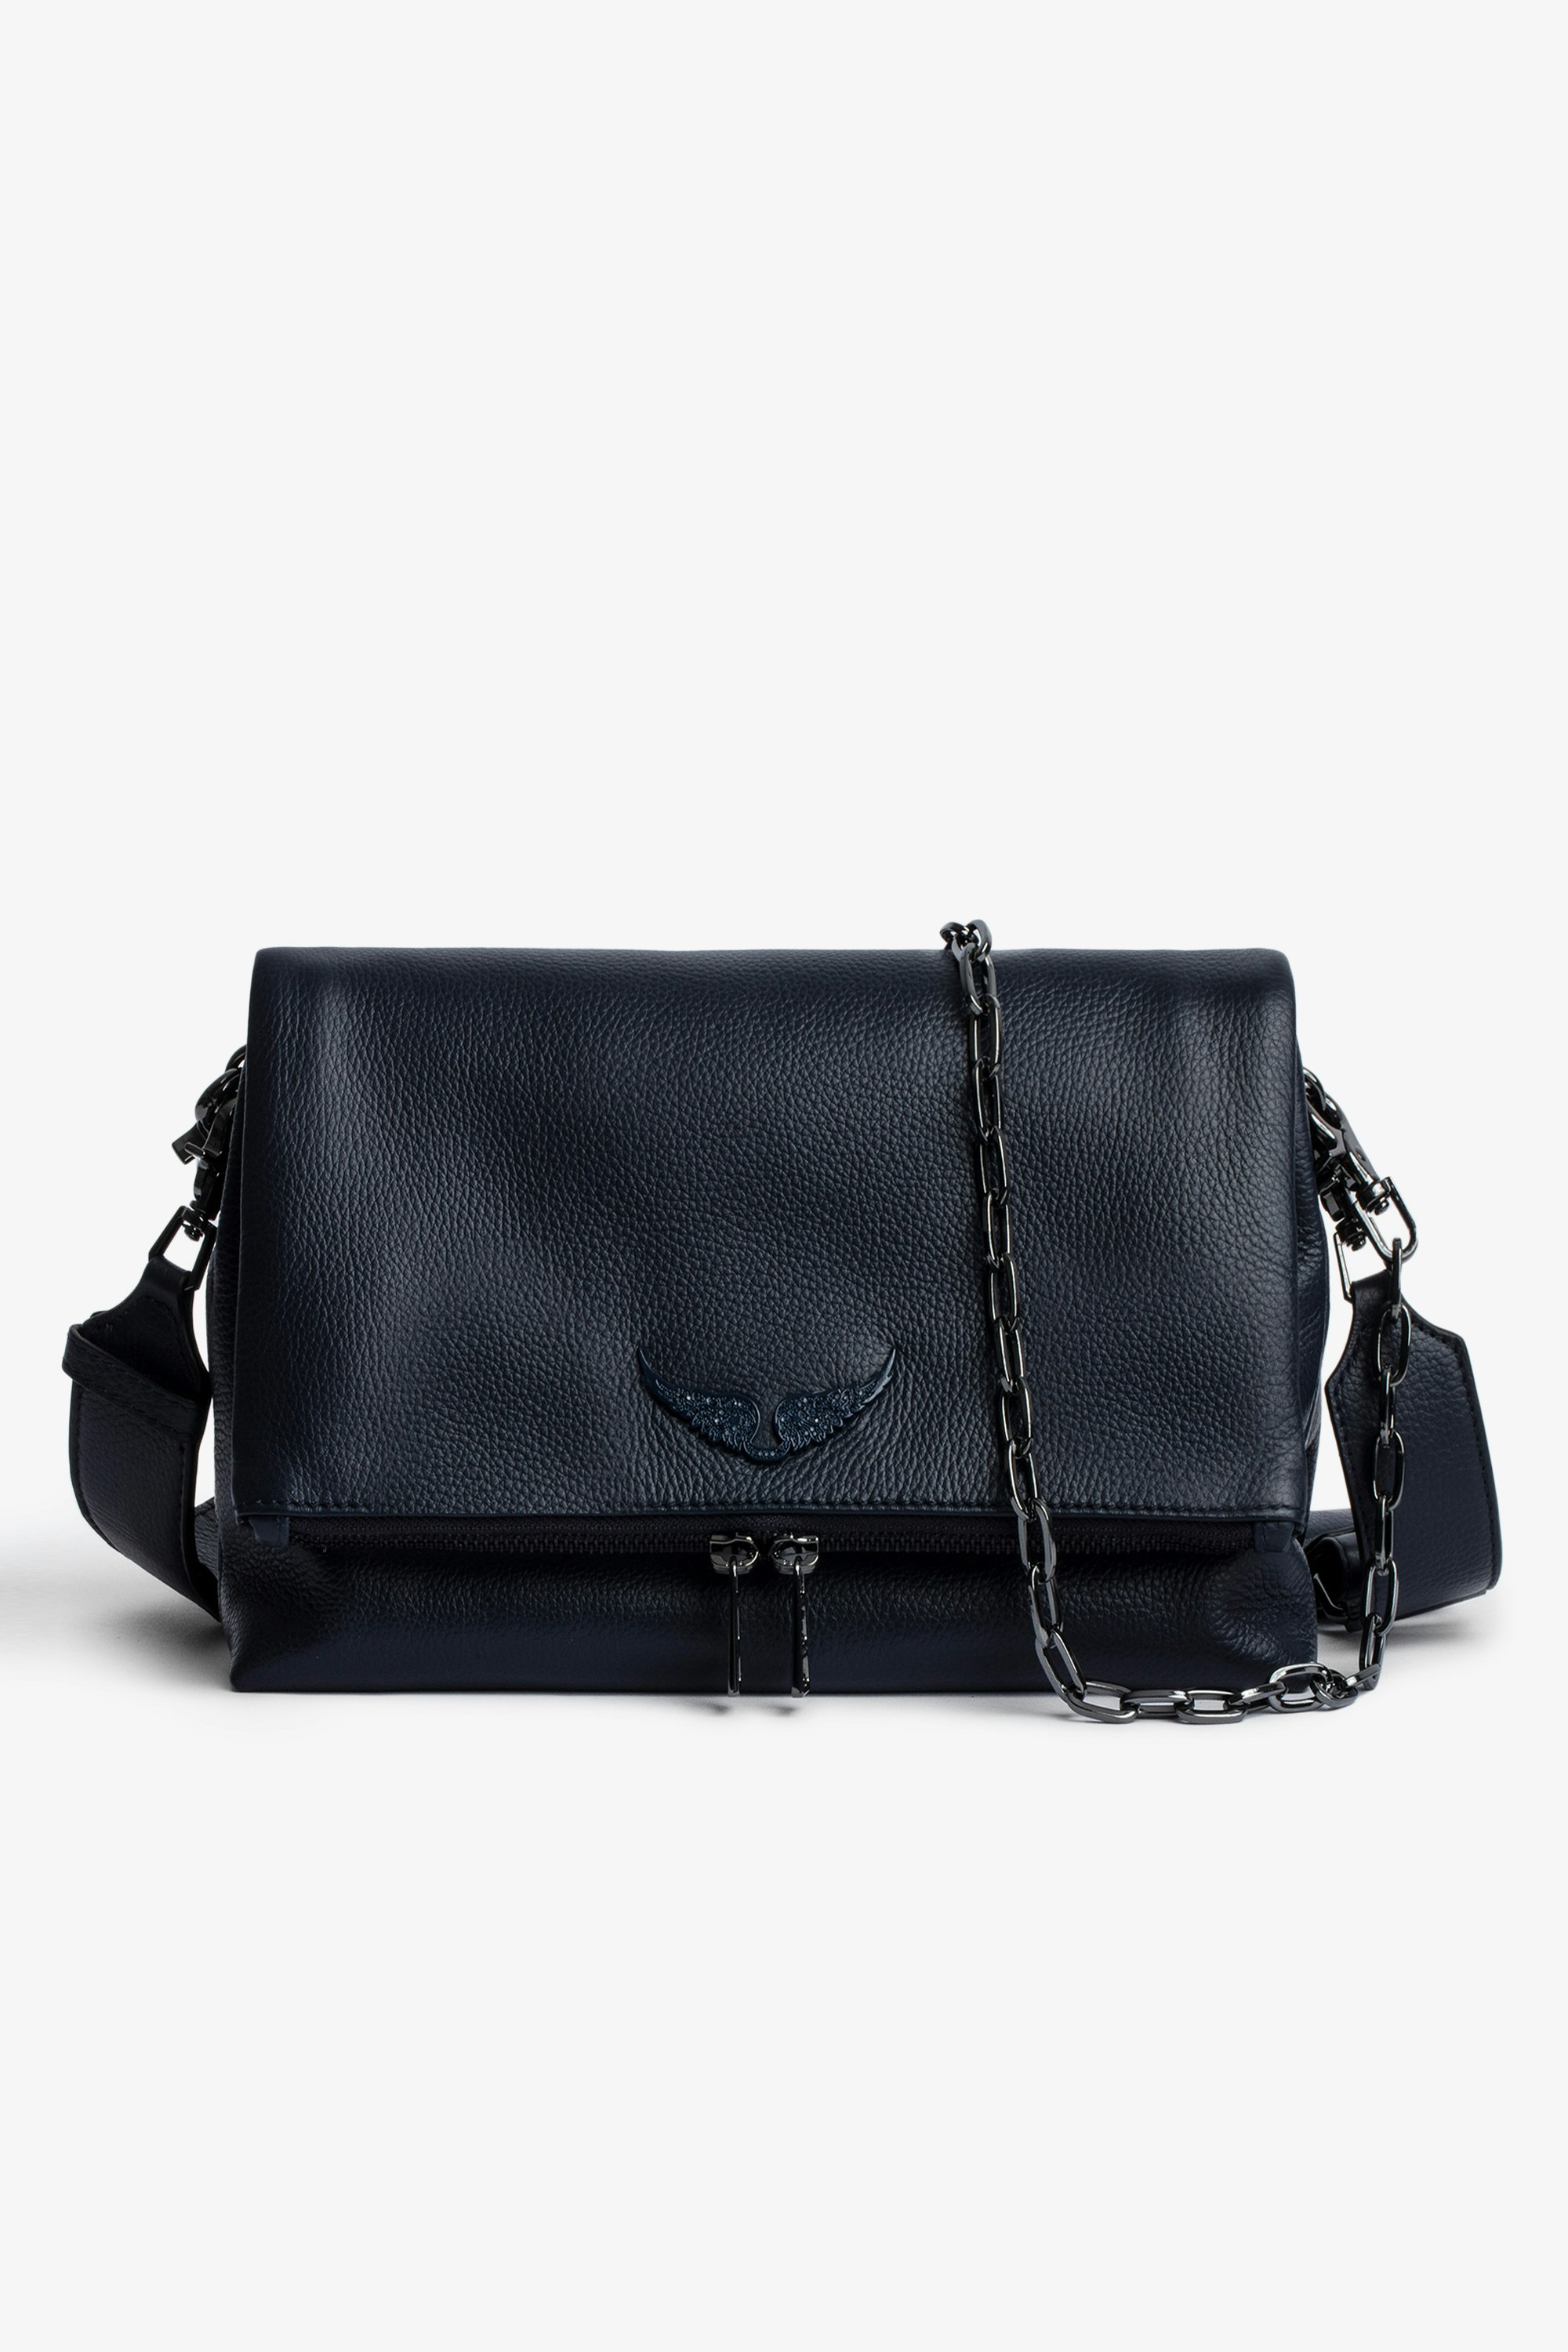 Rocky Bag Women’s Rocky bag in navy blue leather
